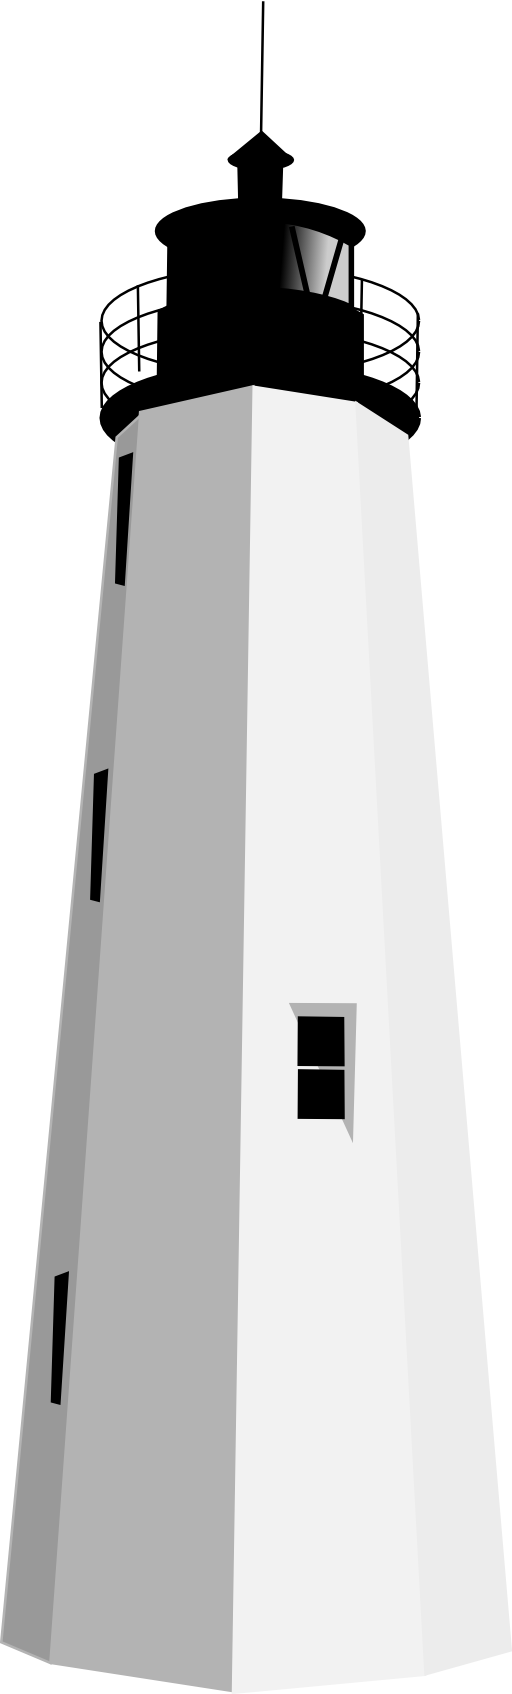 lighthouse clipart lighthouse scene